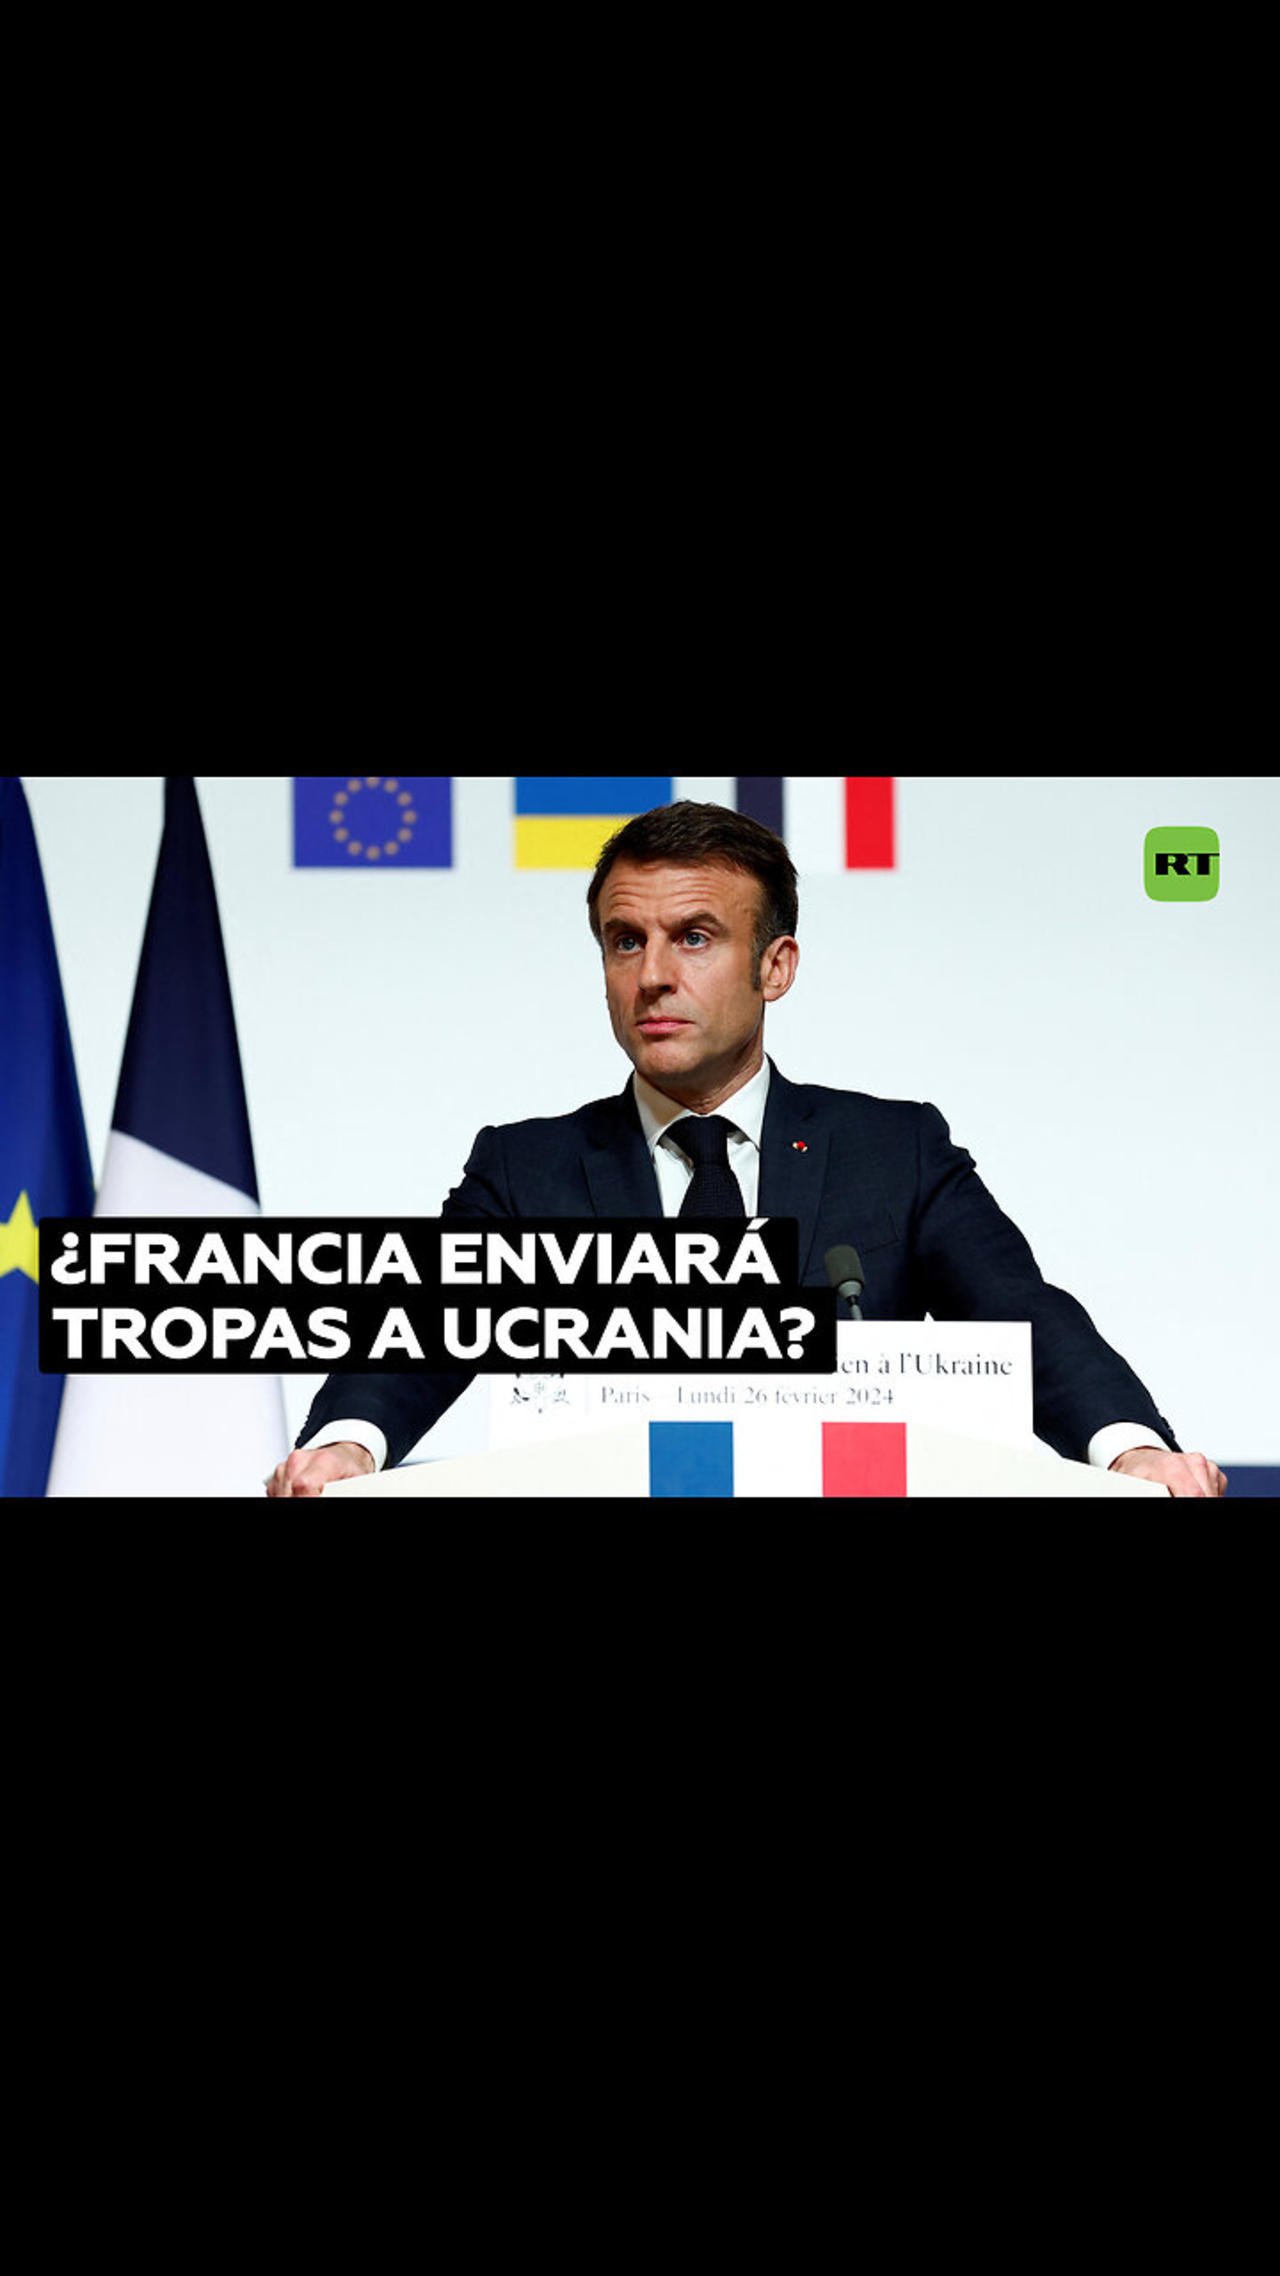 Primer ministro francés sobre el envío de tropas a Ucrania: “No podemos descartar nada”